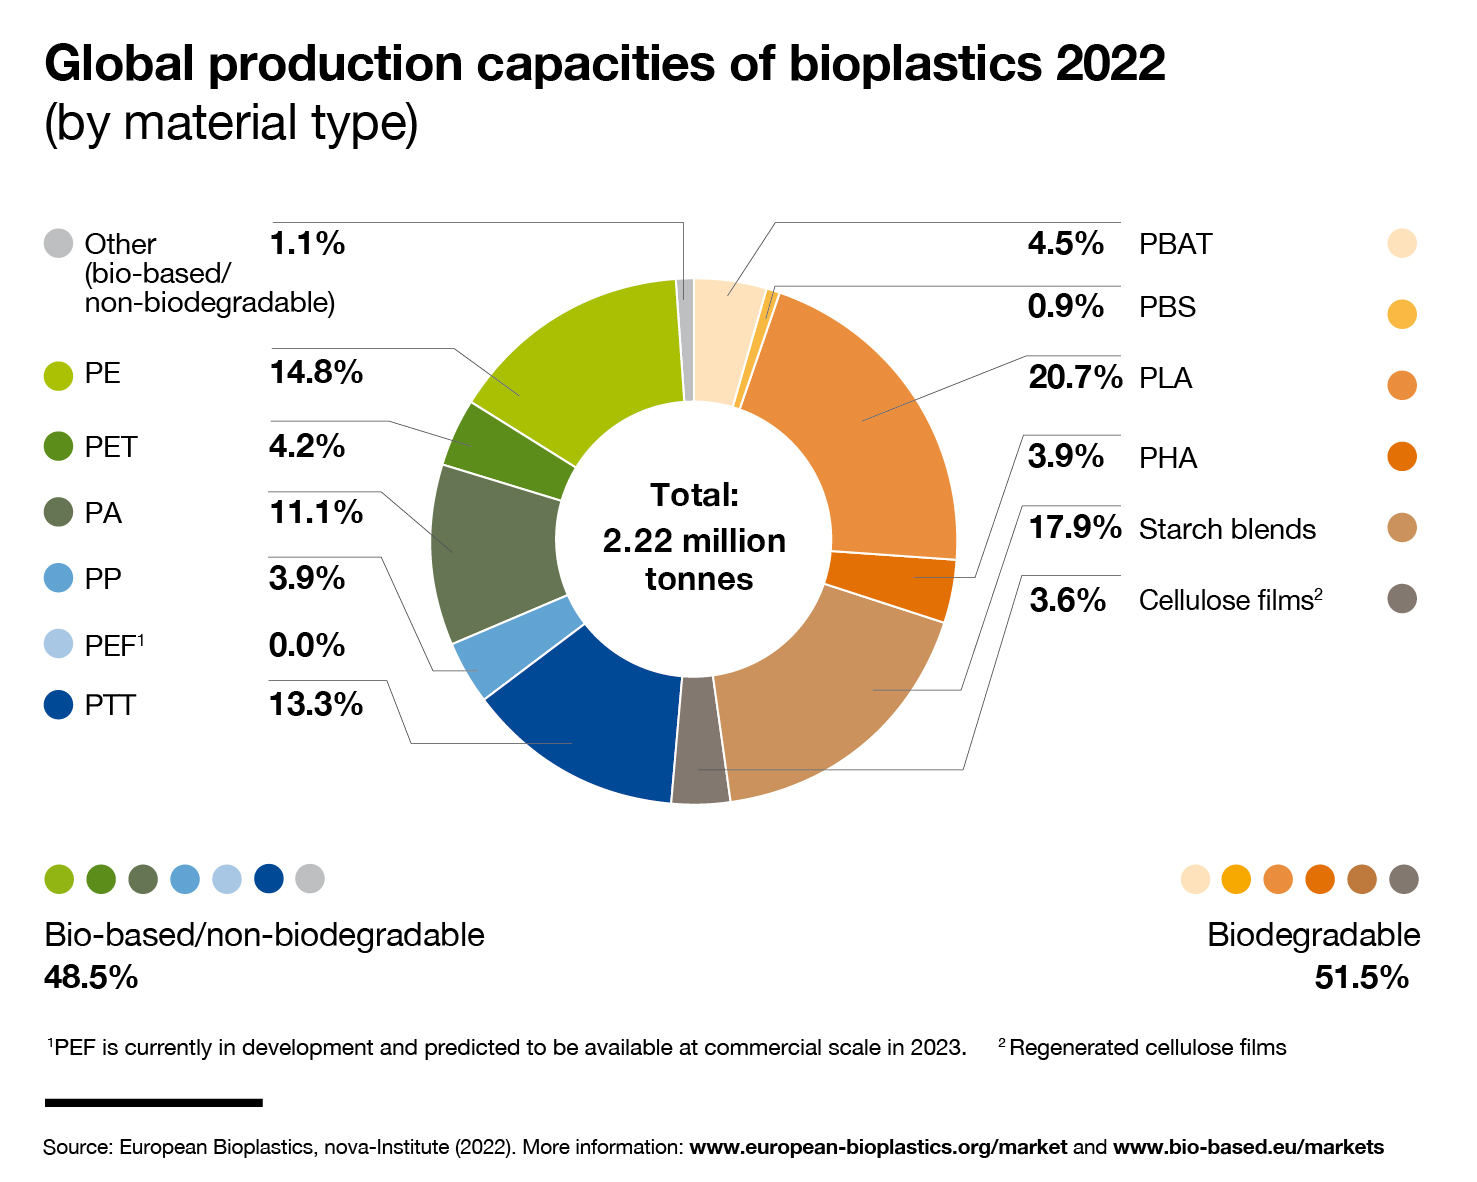 French law to strengthen bioplastics market